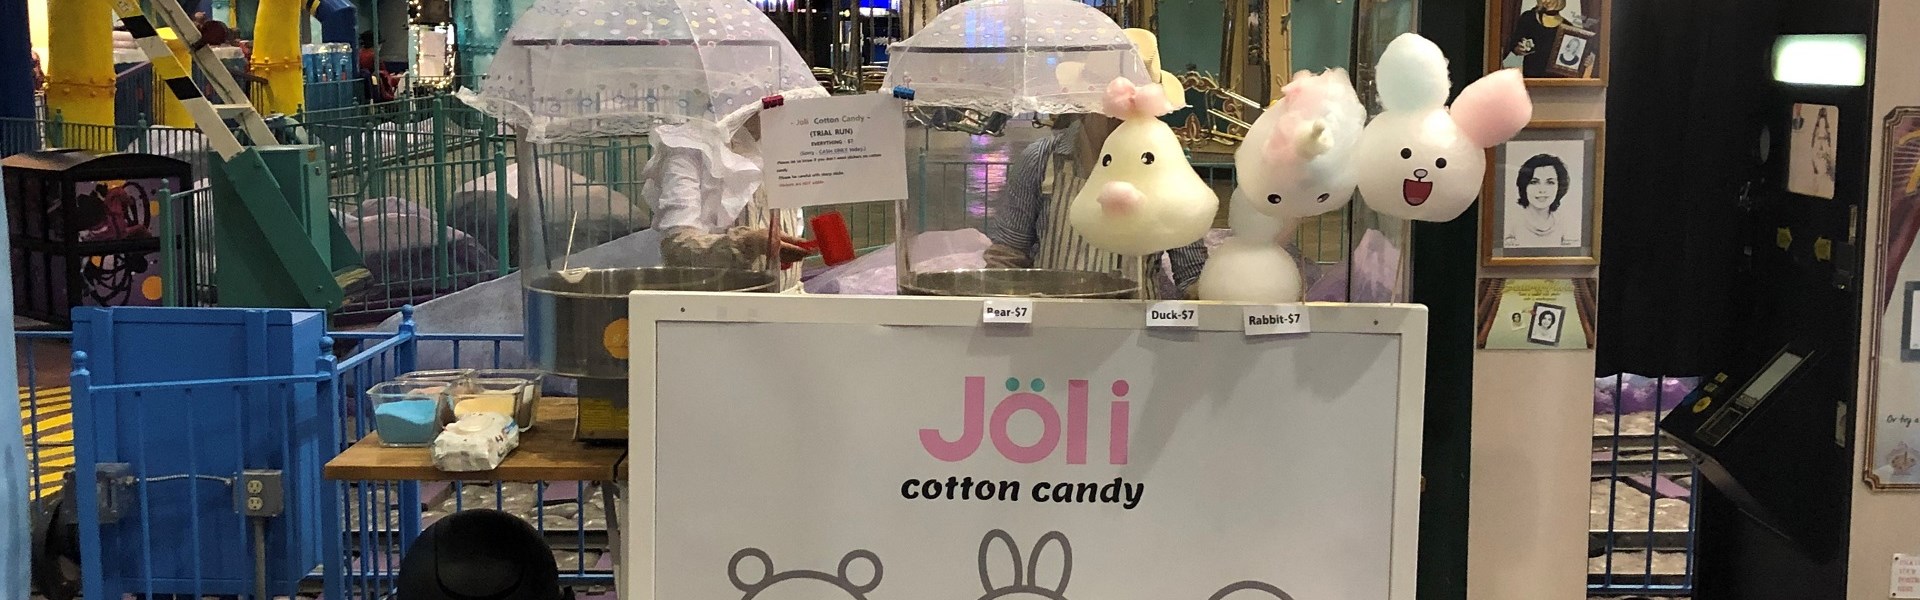 Joli Cotton Candy